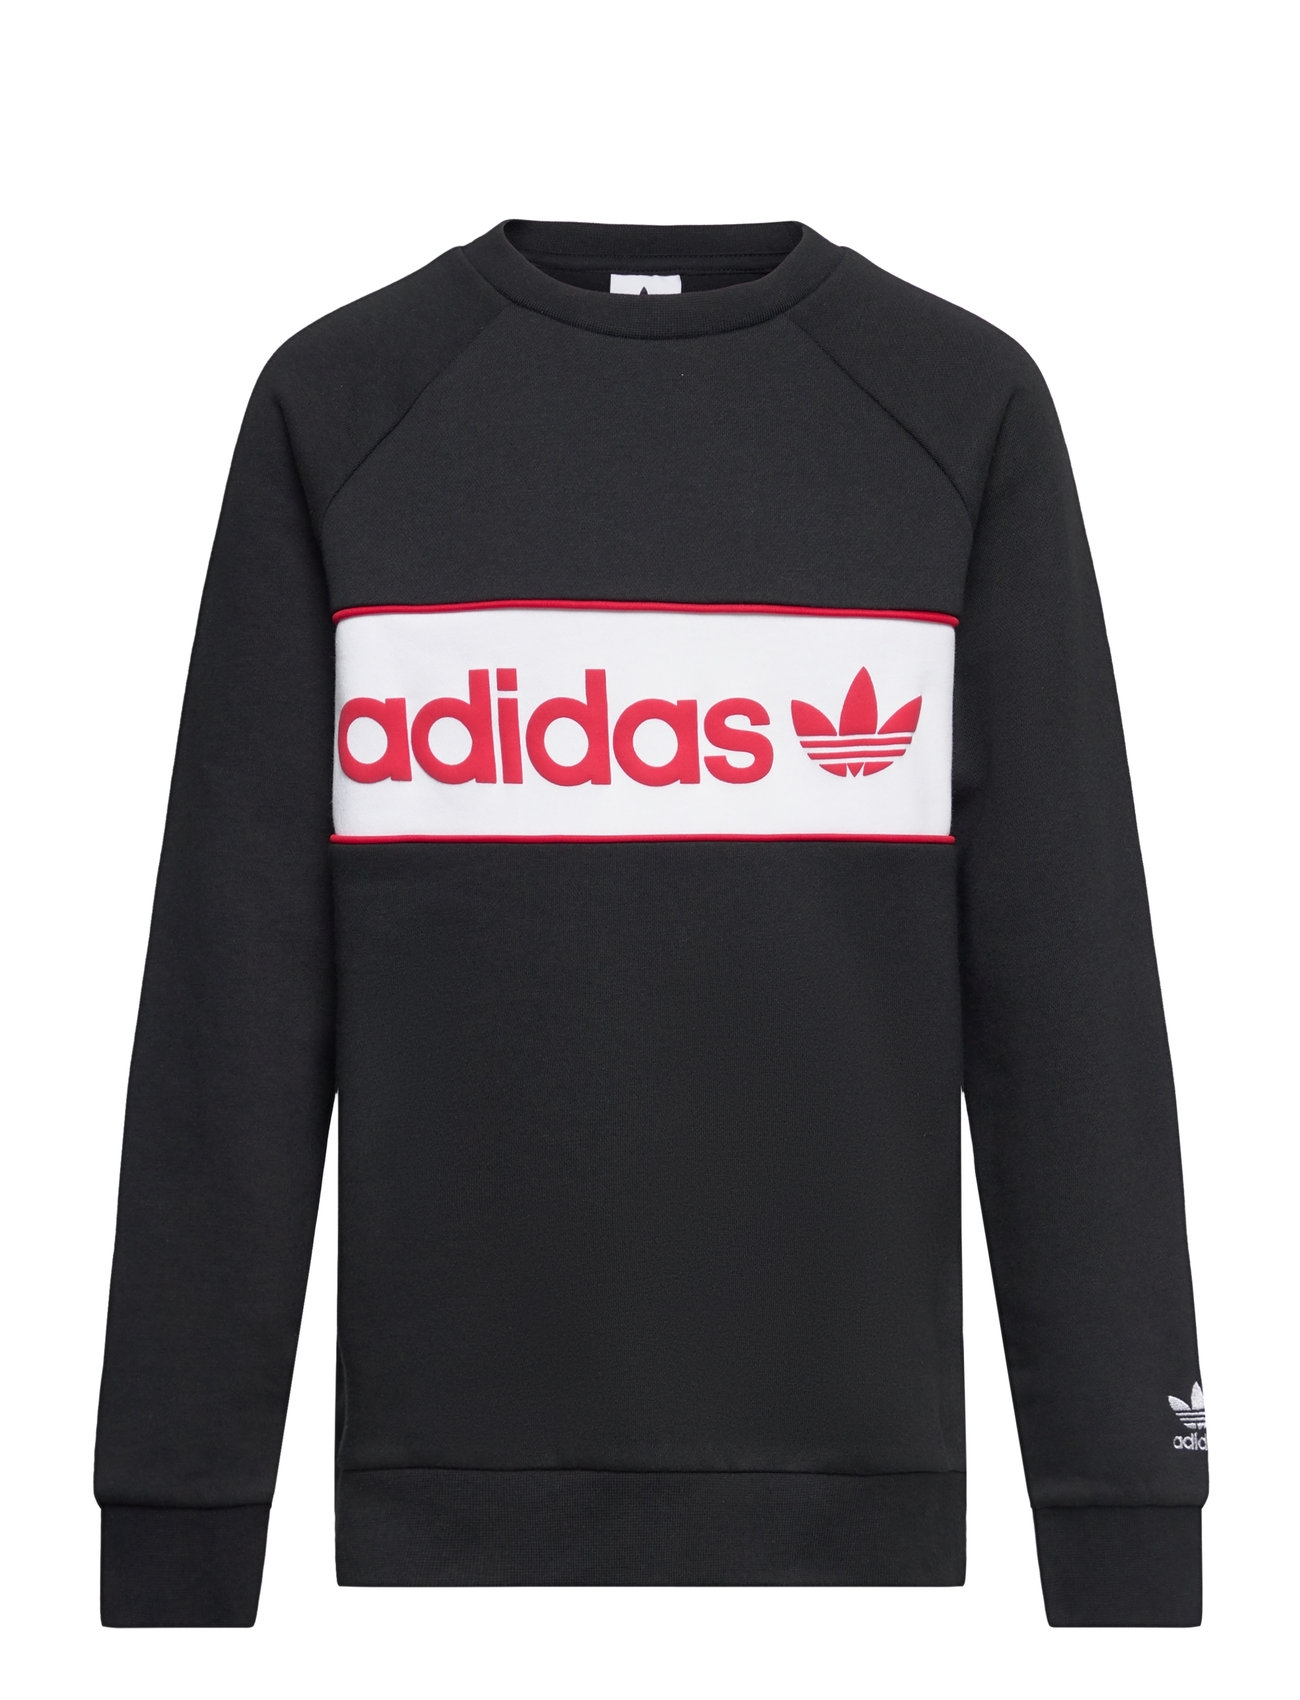 adidas Originals Crew - Sweatshirts | Boozt.com